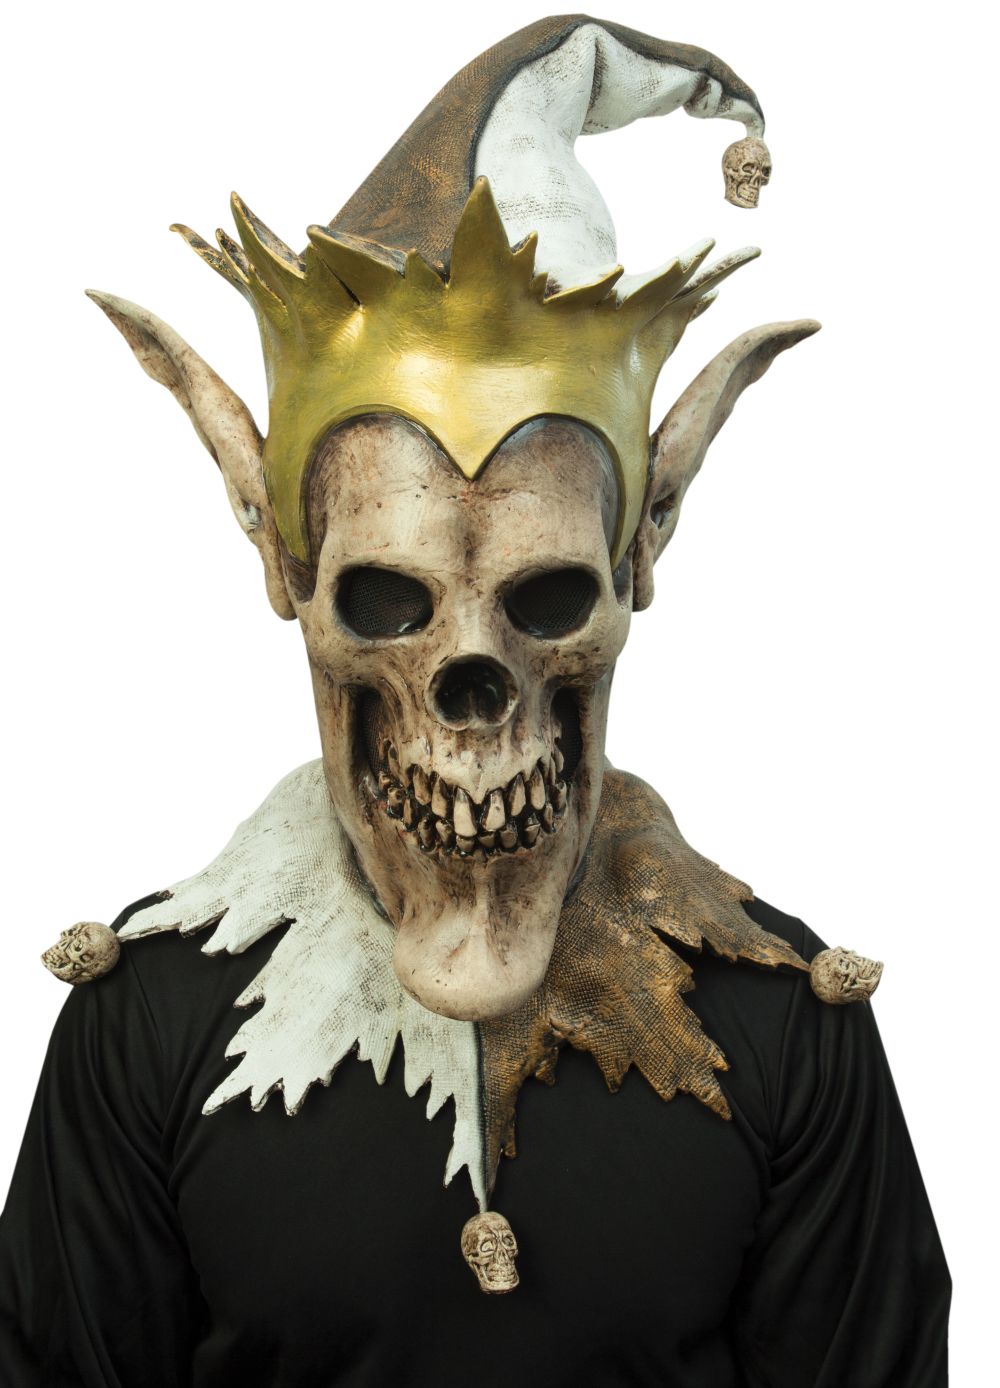 Party Masks Pumpkin Mask Halloween Devil Ghost Cospla Latex